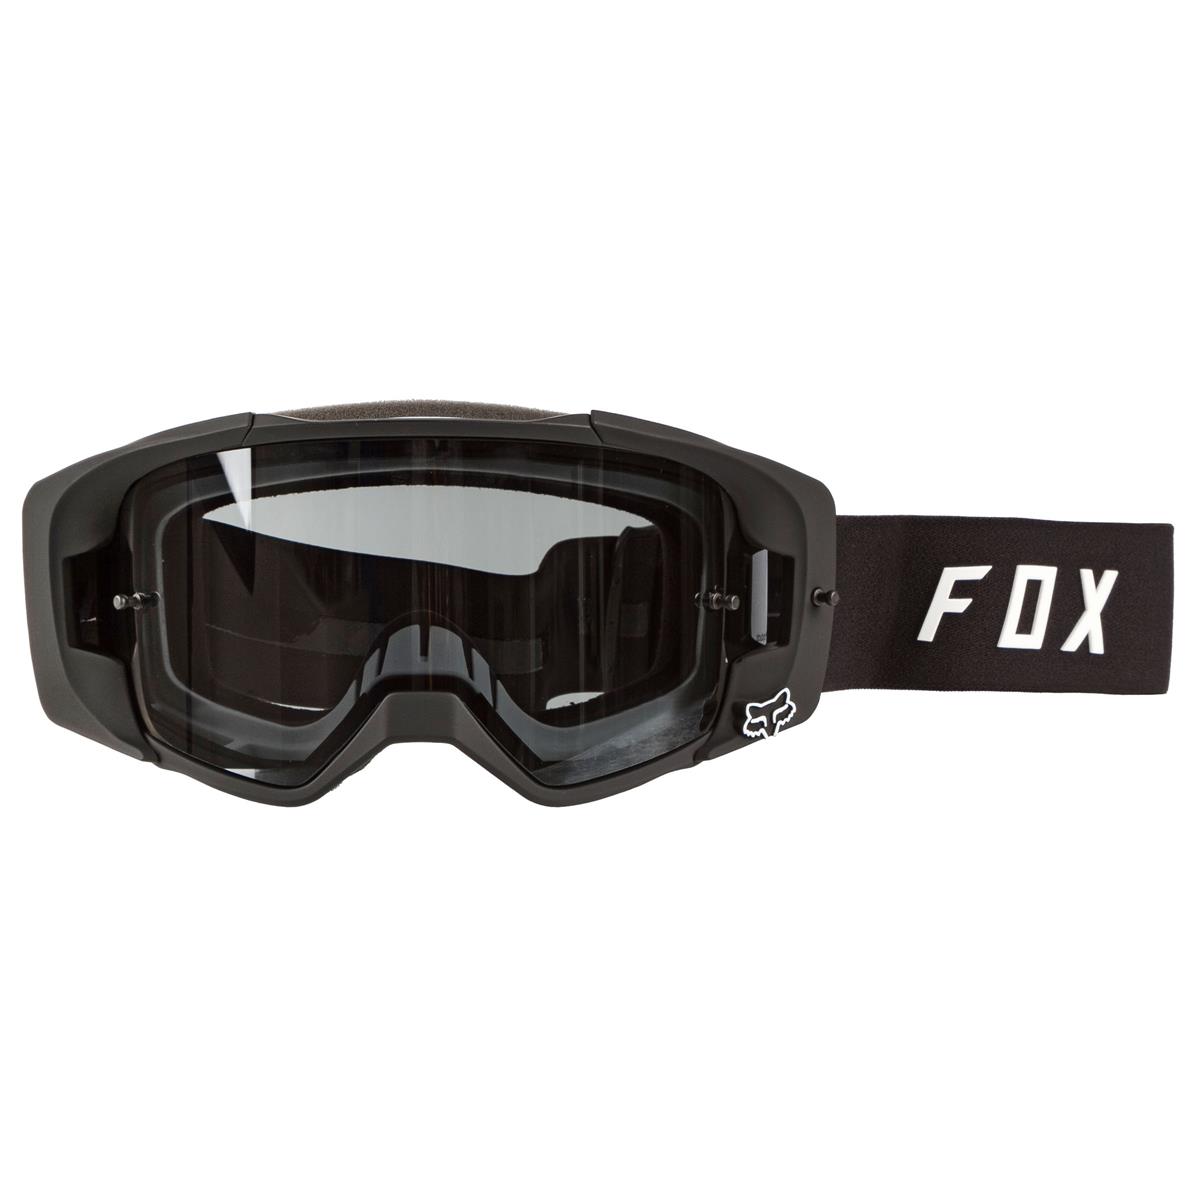 Fox Goggle VUE Black - Silver mirrored, Anti-Fog